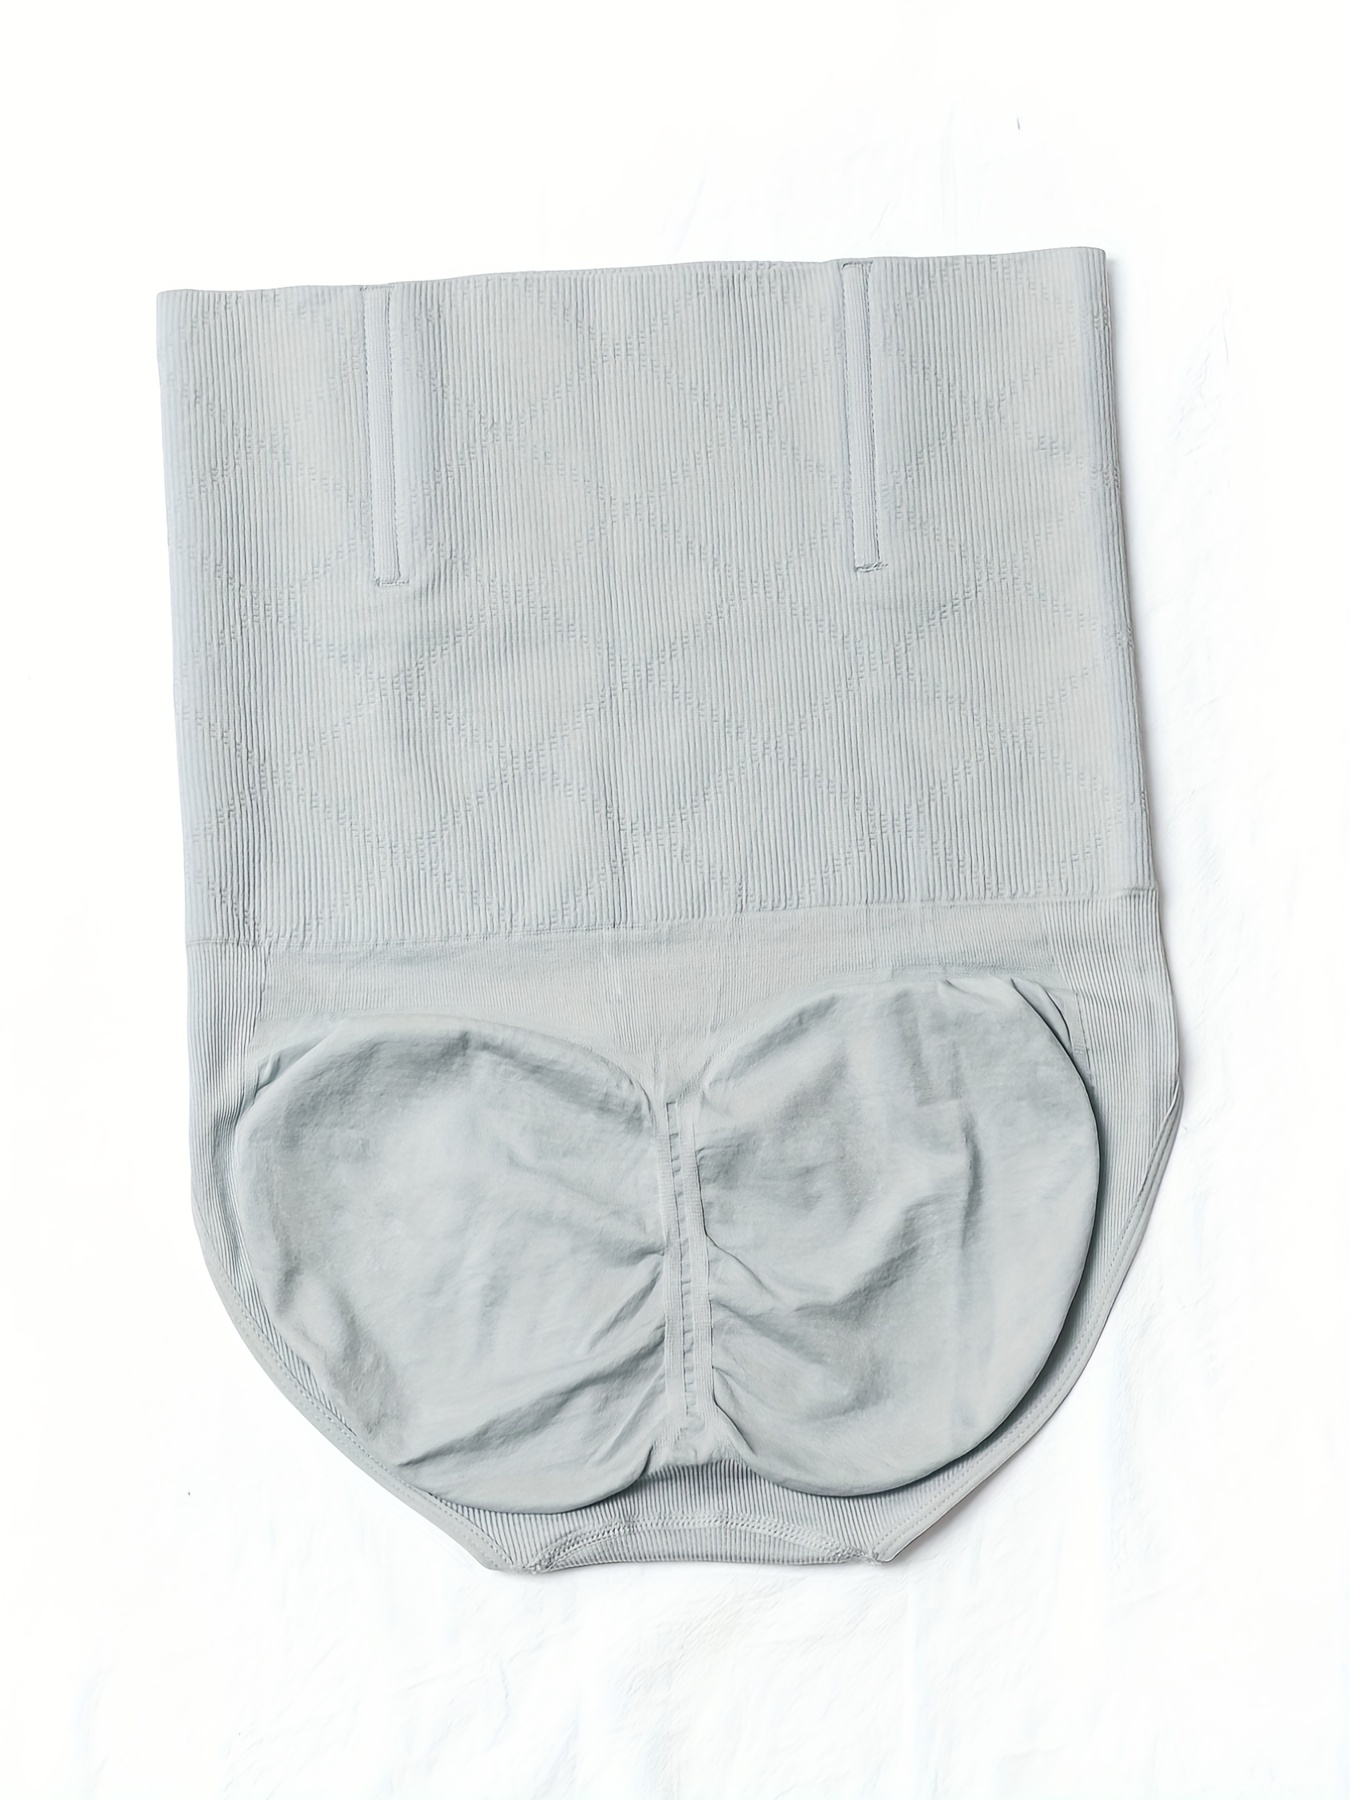 High Waist Cotton Seamless Cotton Panties For Plus Size Women Fashion  Print, Seamless, Sexy Body Shaper Lingerie M 5XL From Bai01, $9.04